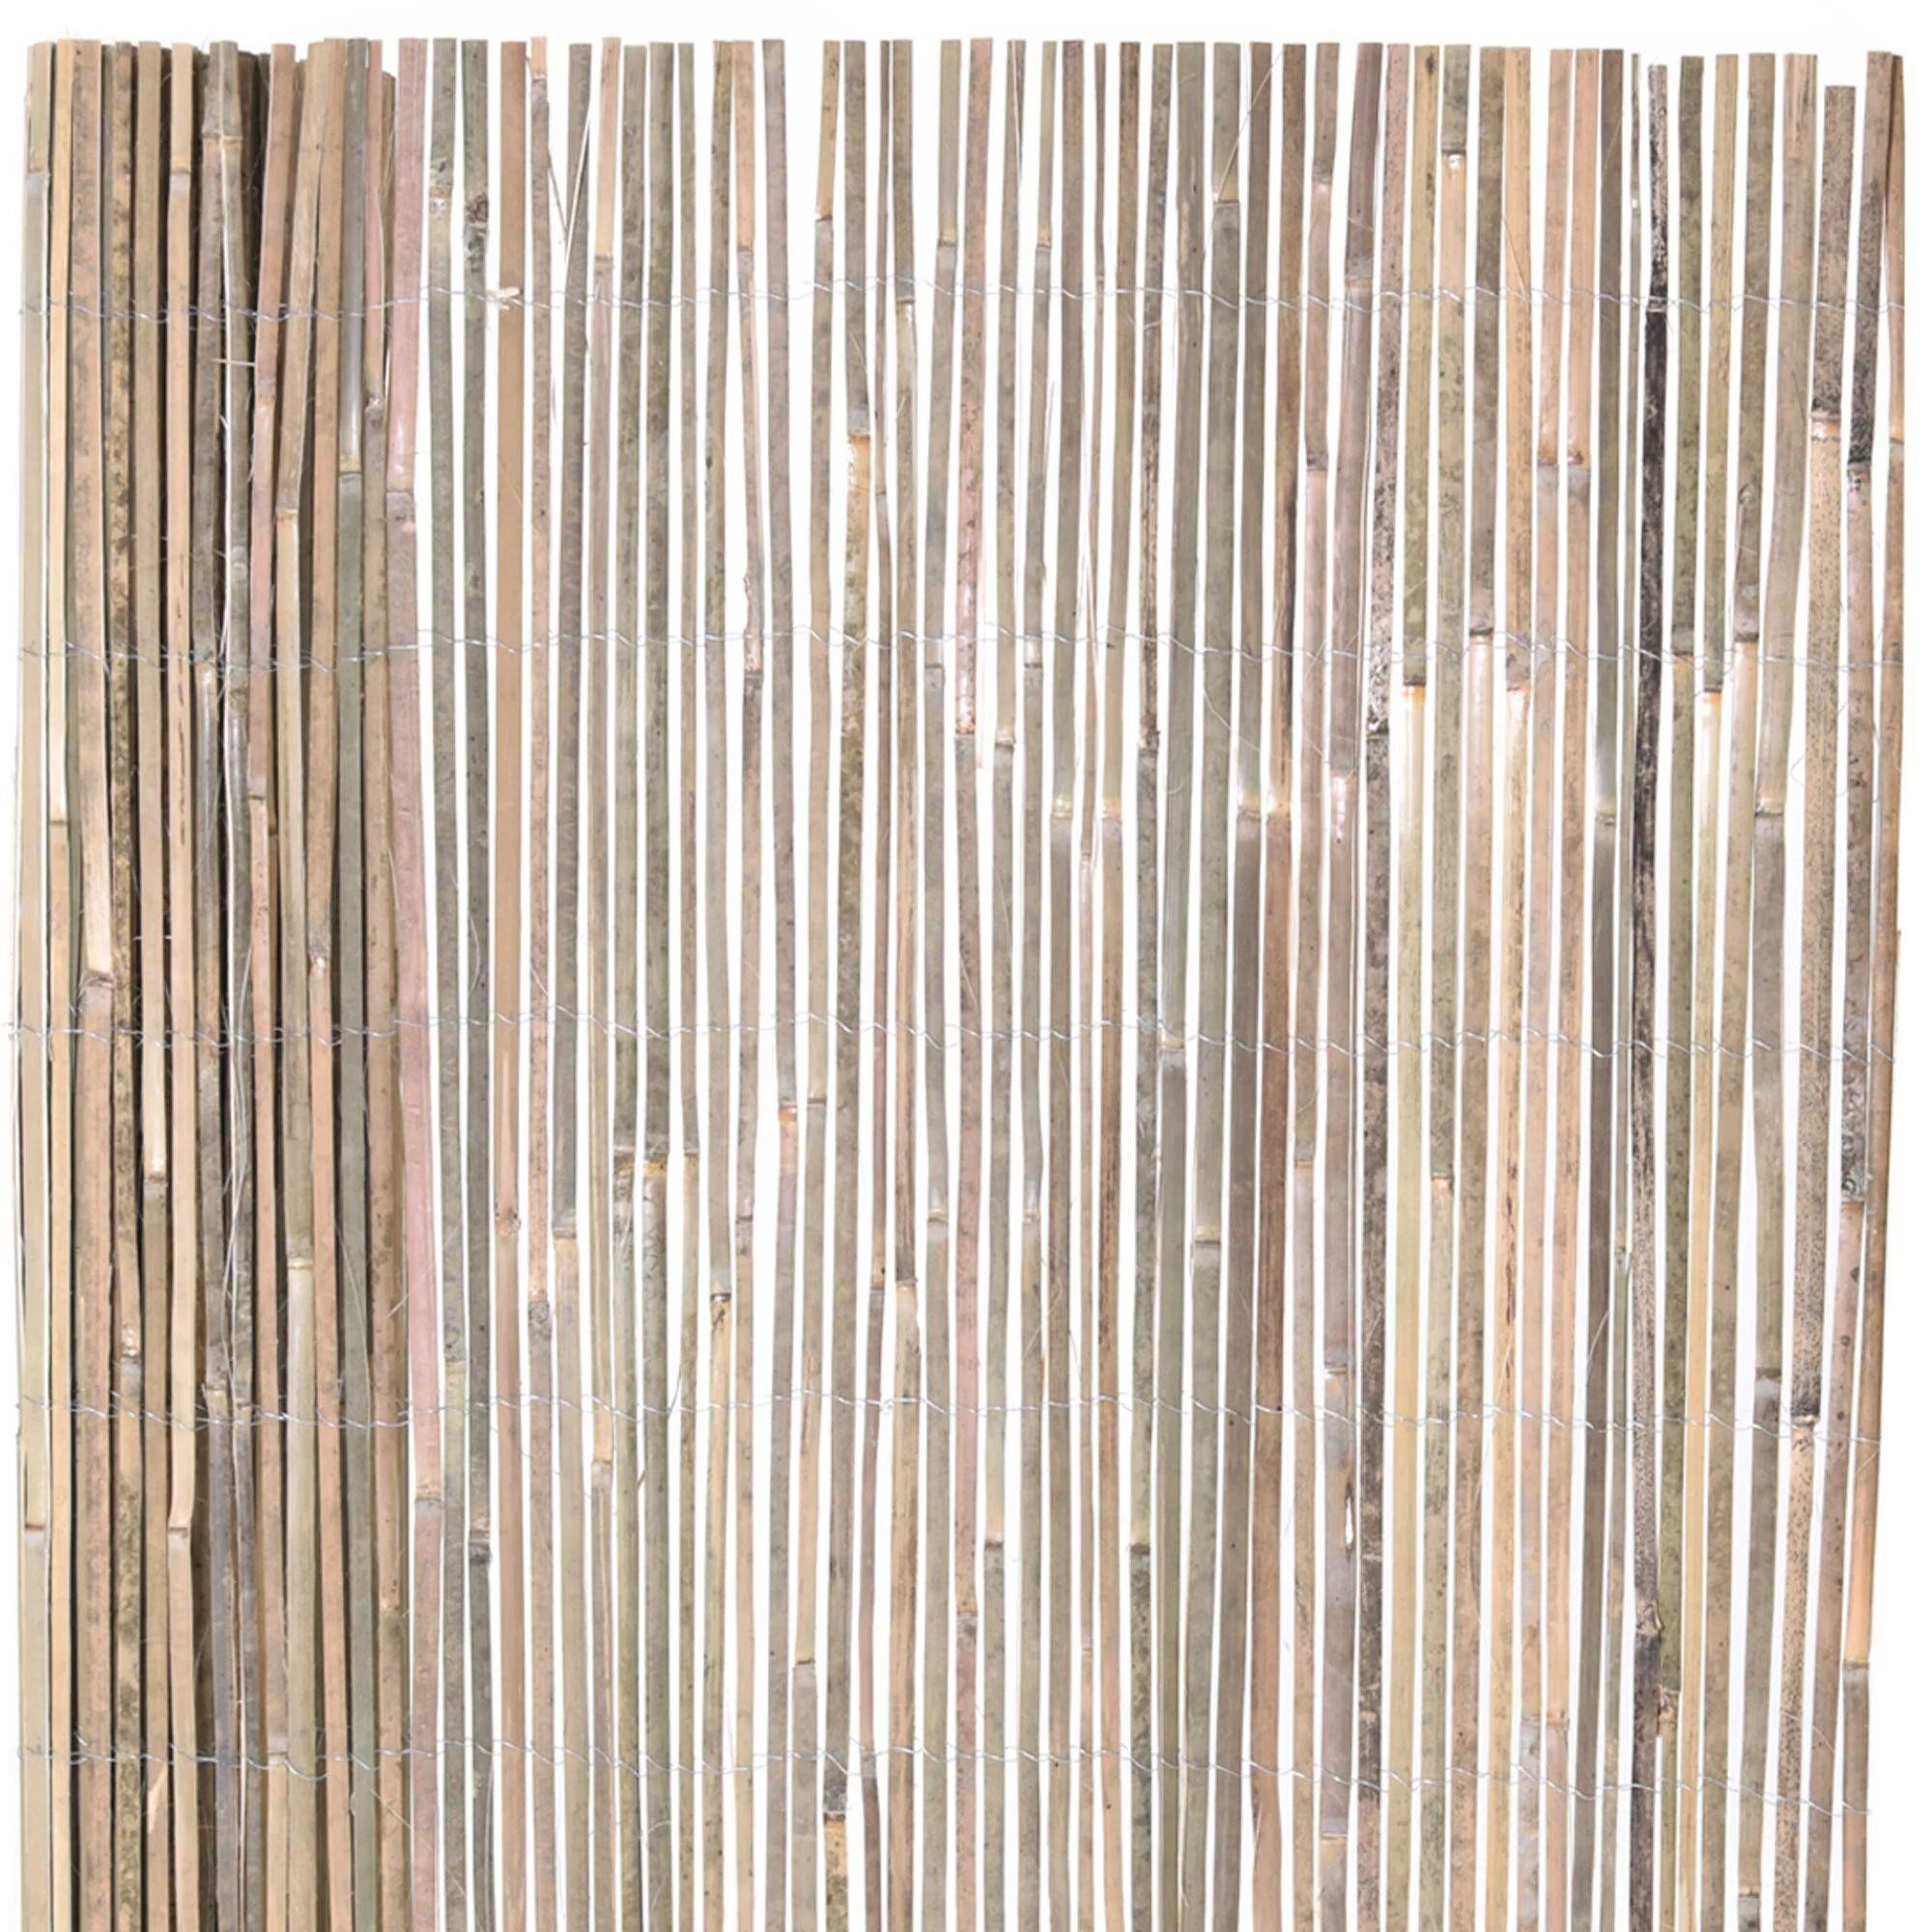 48"Hx72"L Natural Raw Split Bamboo Slat Fence